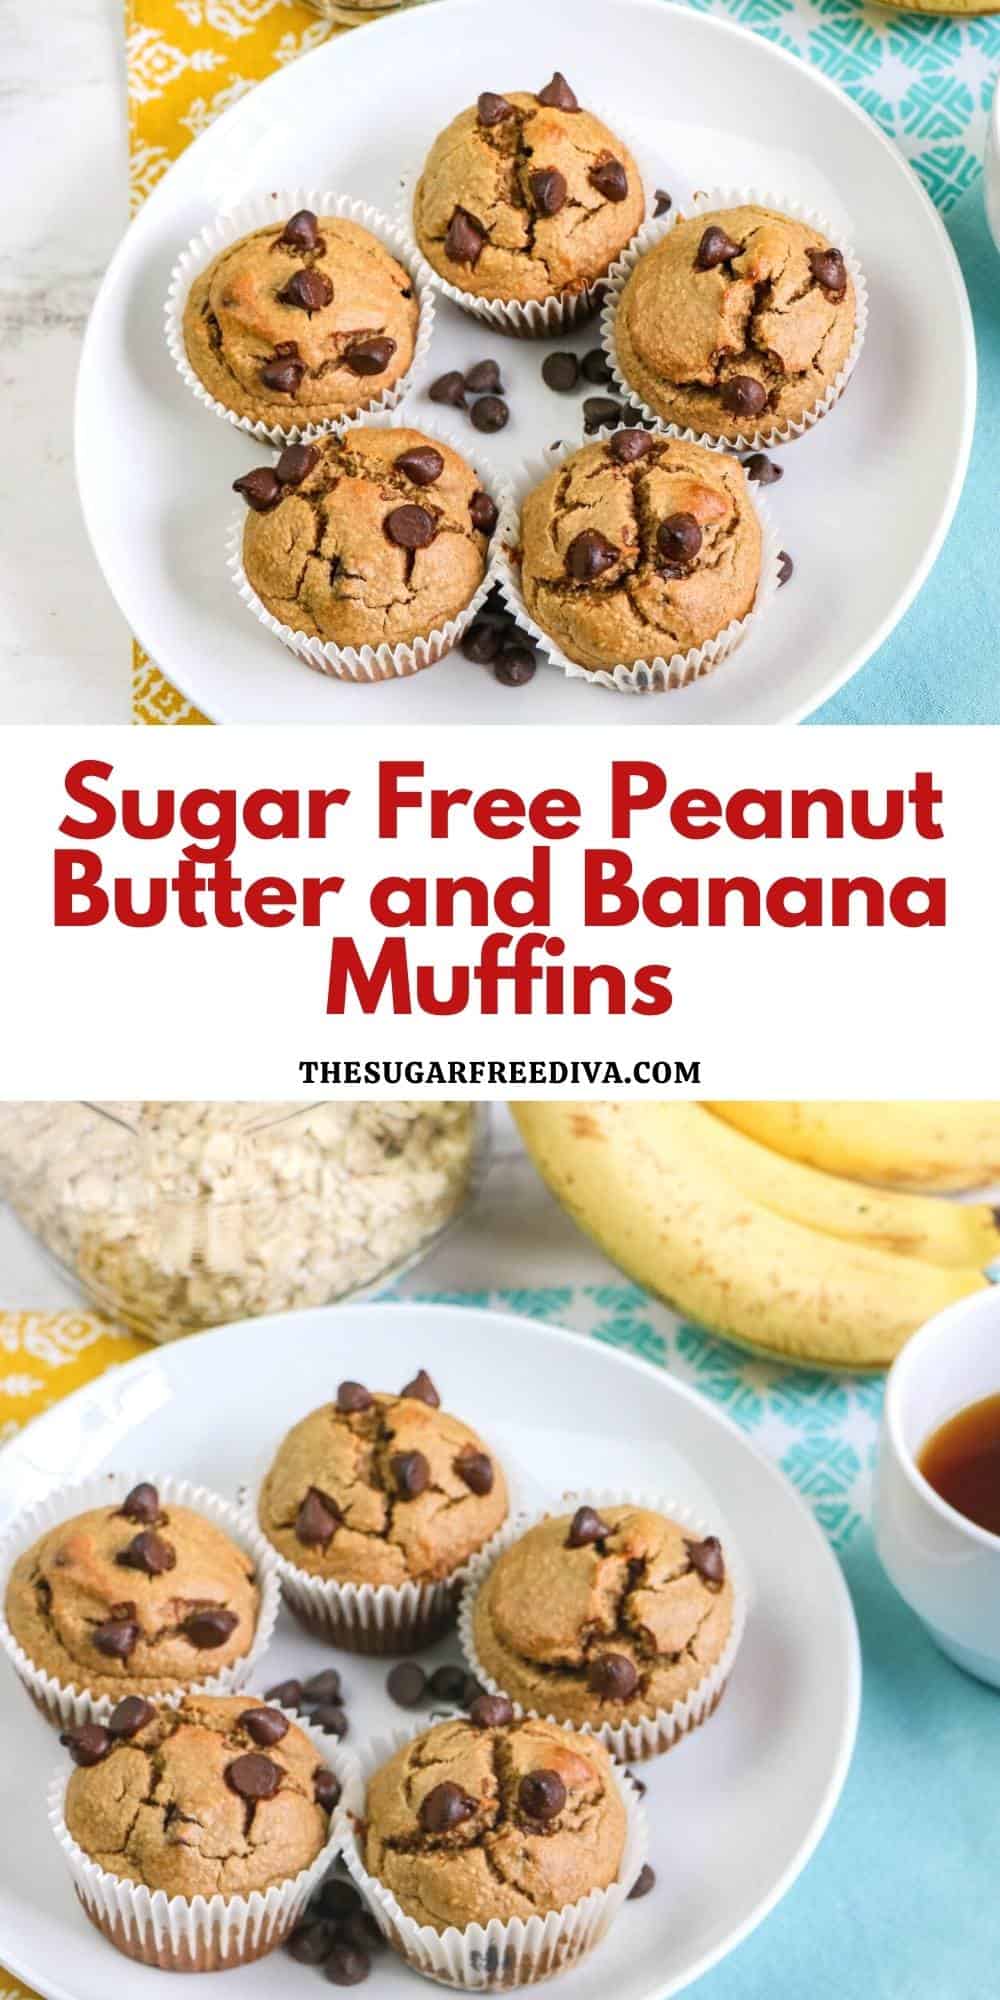 Sugar Free Peanut Butter and Banana Muffins